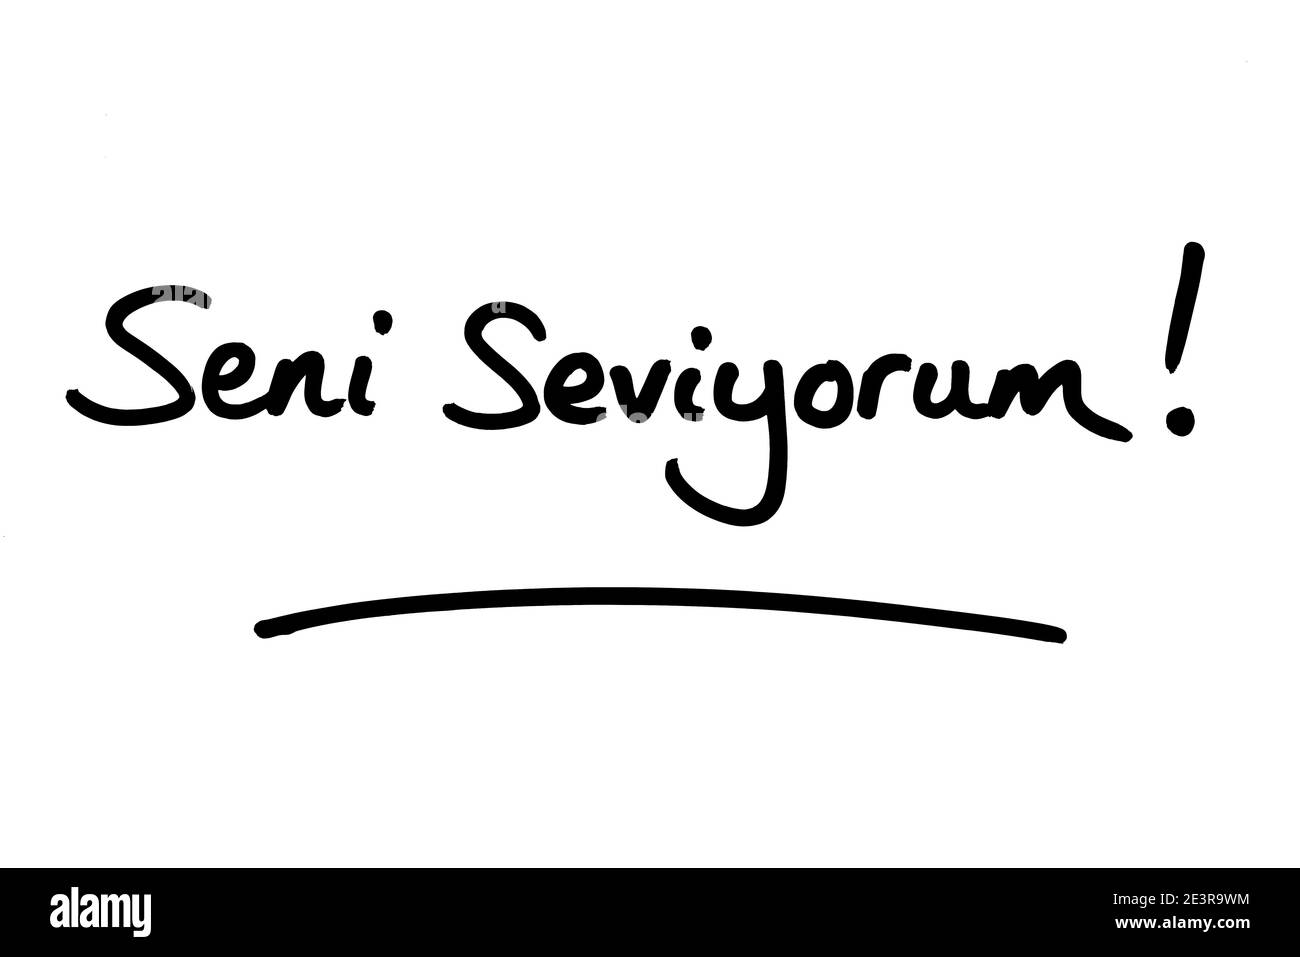 Seni Seviyorum! - meaning I Love You, in the Turkish language, handwritten on a white background. Stock Photo